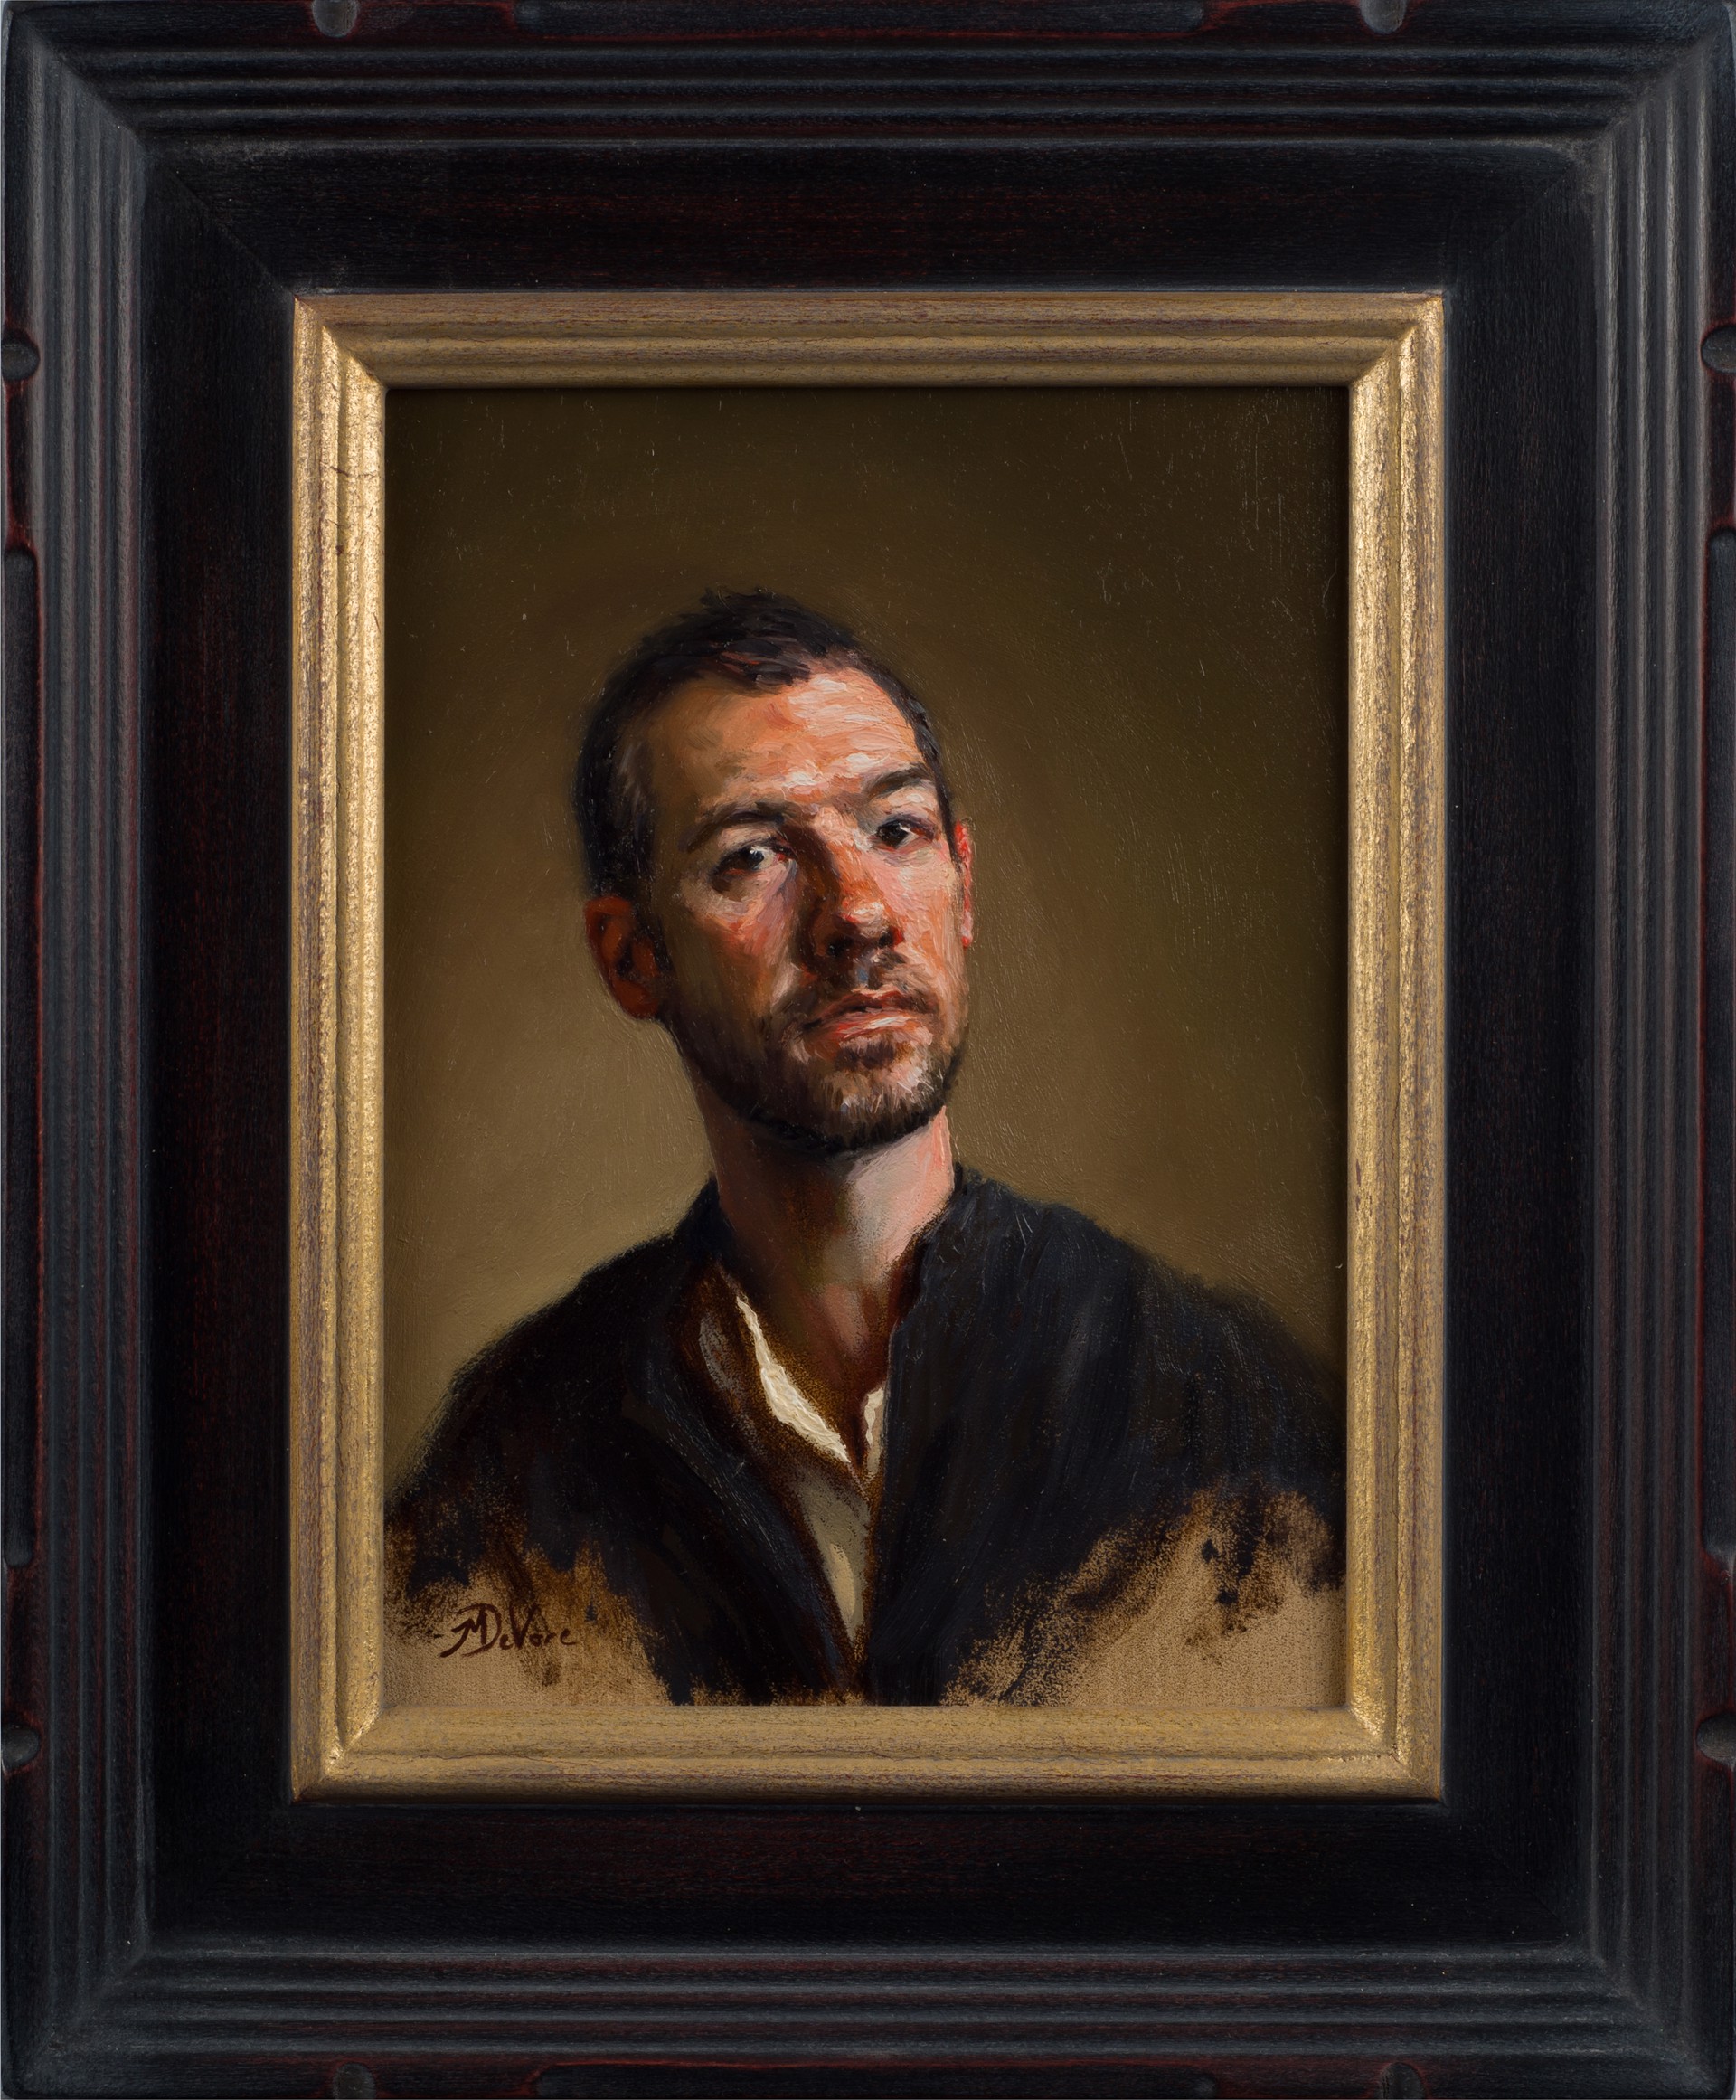 Self-Portrait by Michael DeVore